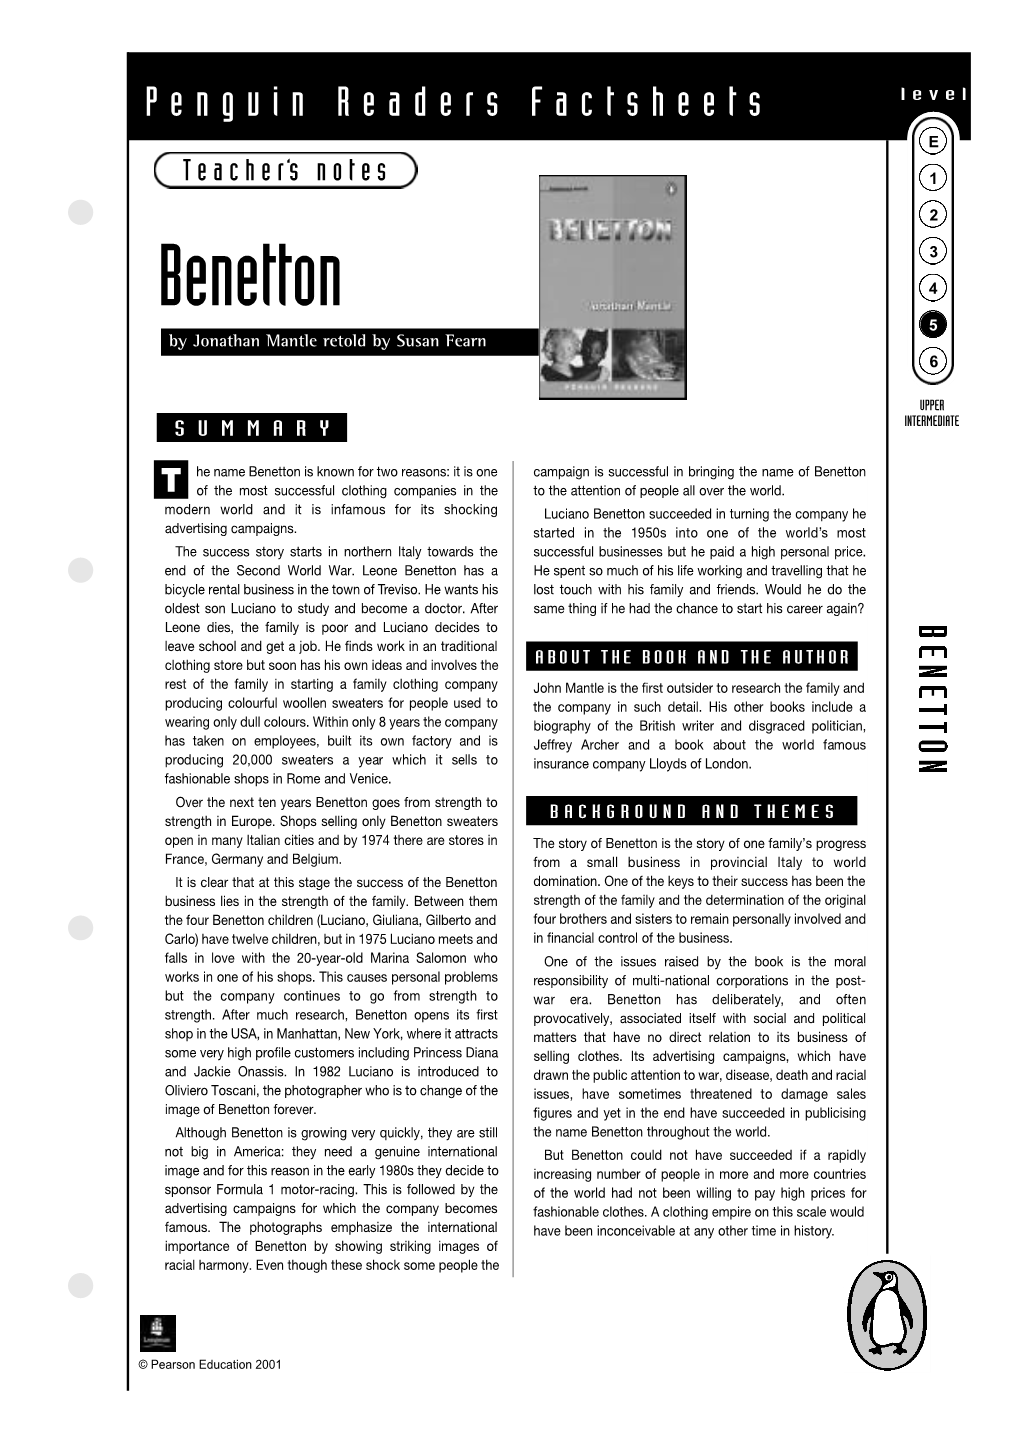 Benetton 4 5 by Jonathan Mantle Retold by Susan Fearn 6